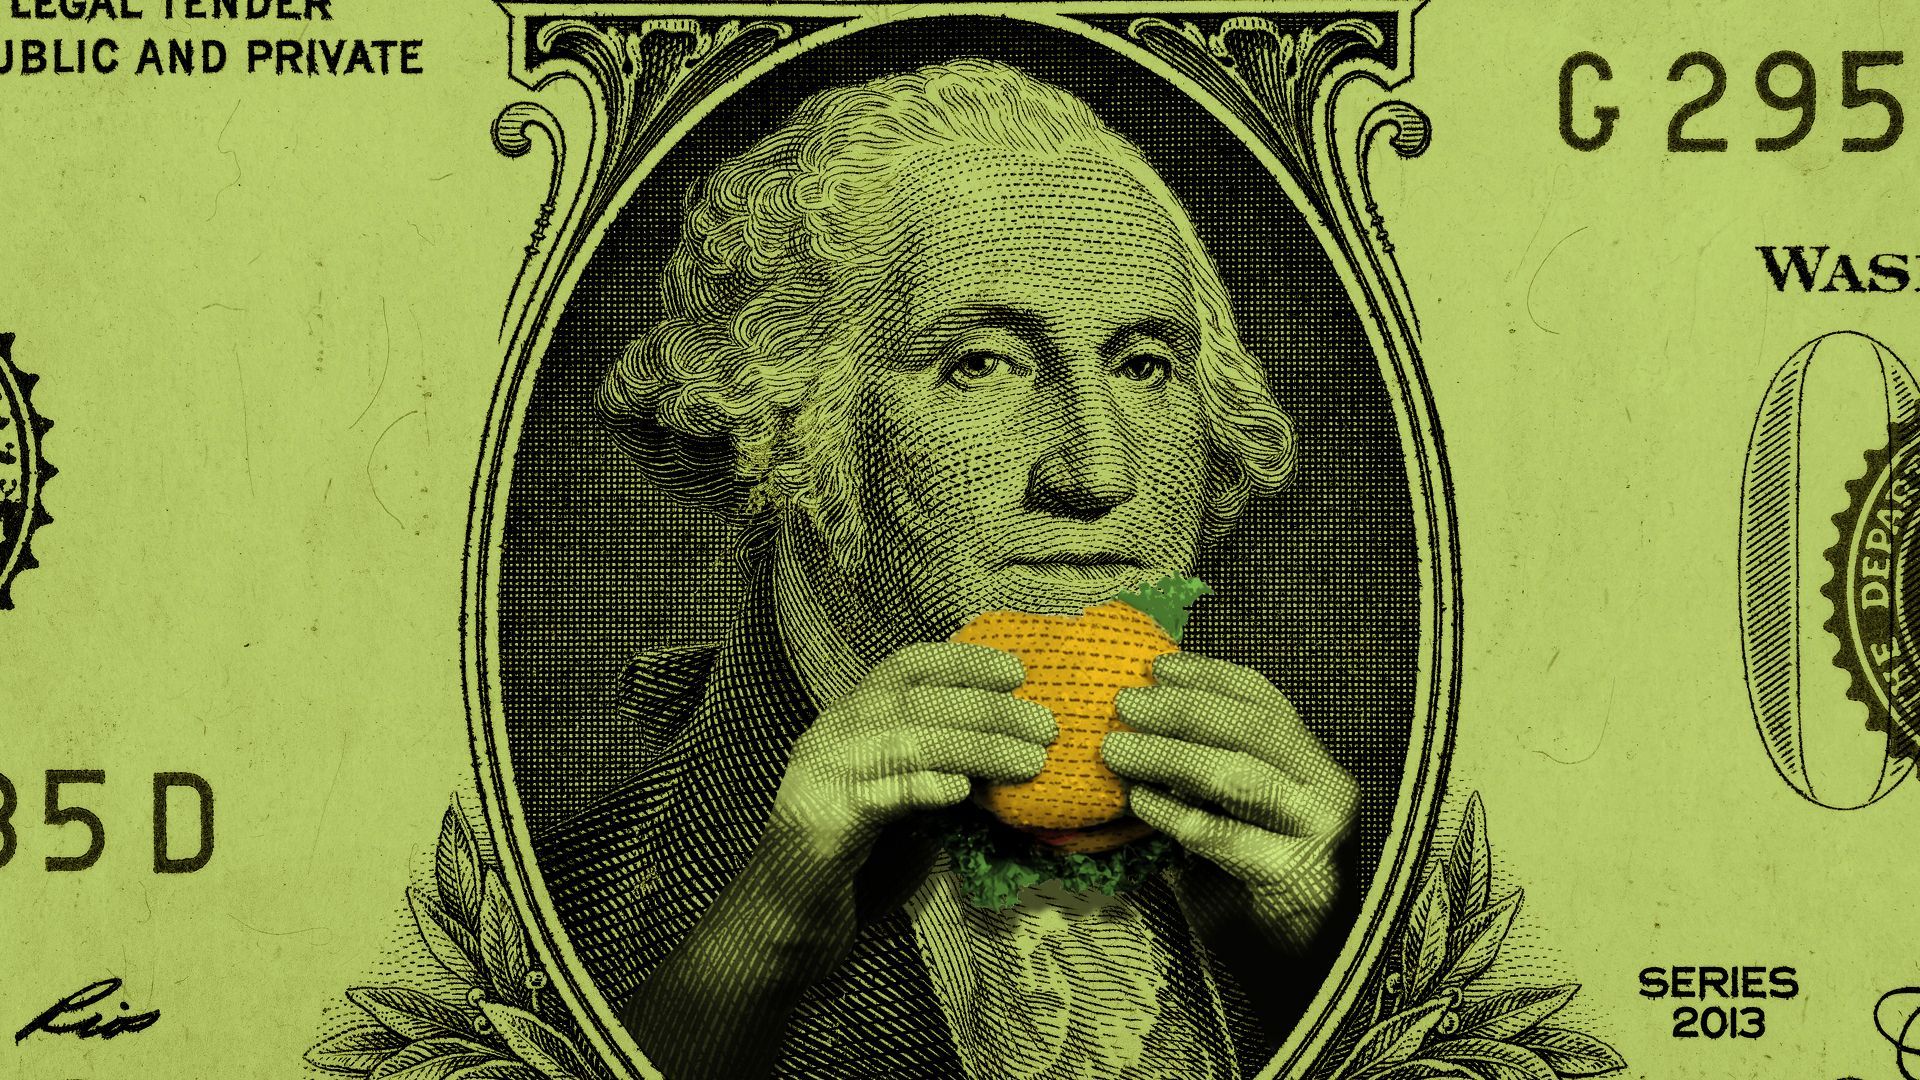 Illustration of George Washington on a one dollar bill holding a cheeseburger